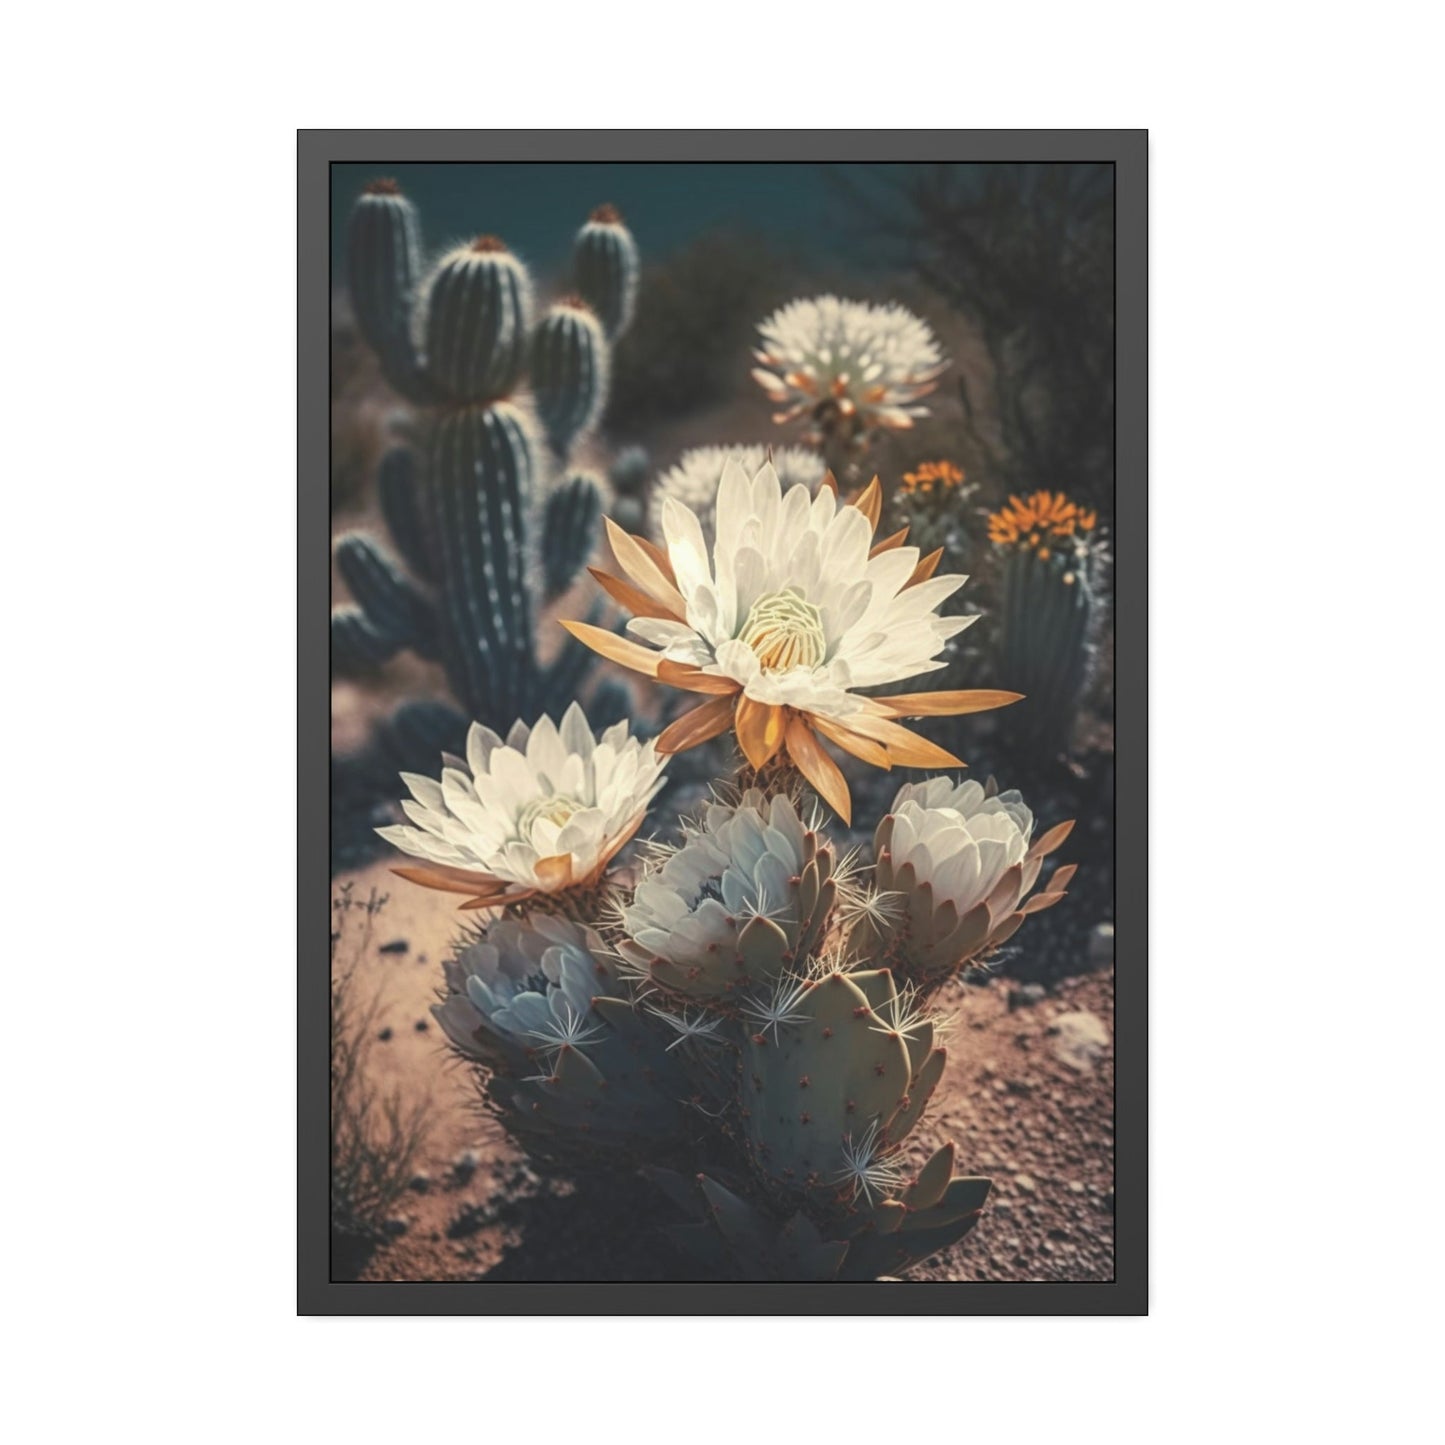 Desert Chic: Framed Cactus Wall Art for a Stylish Home Decor